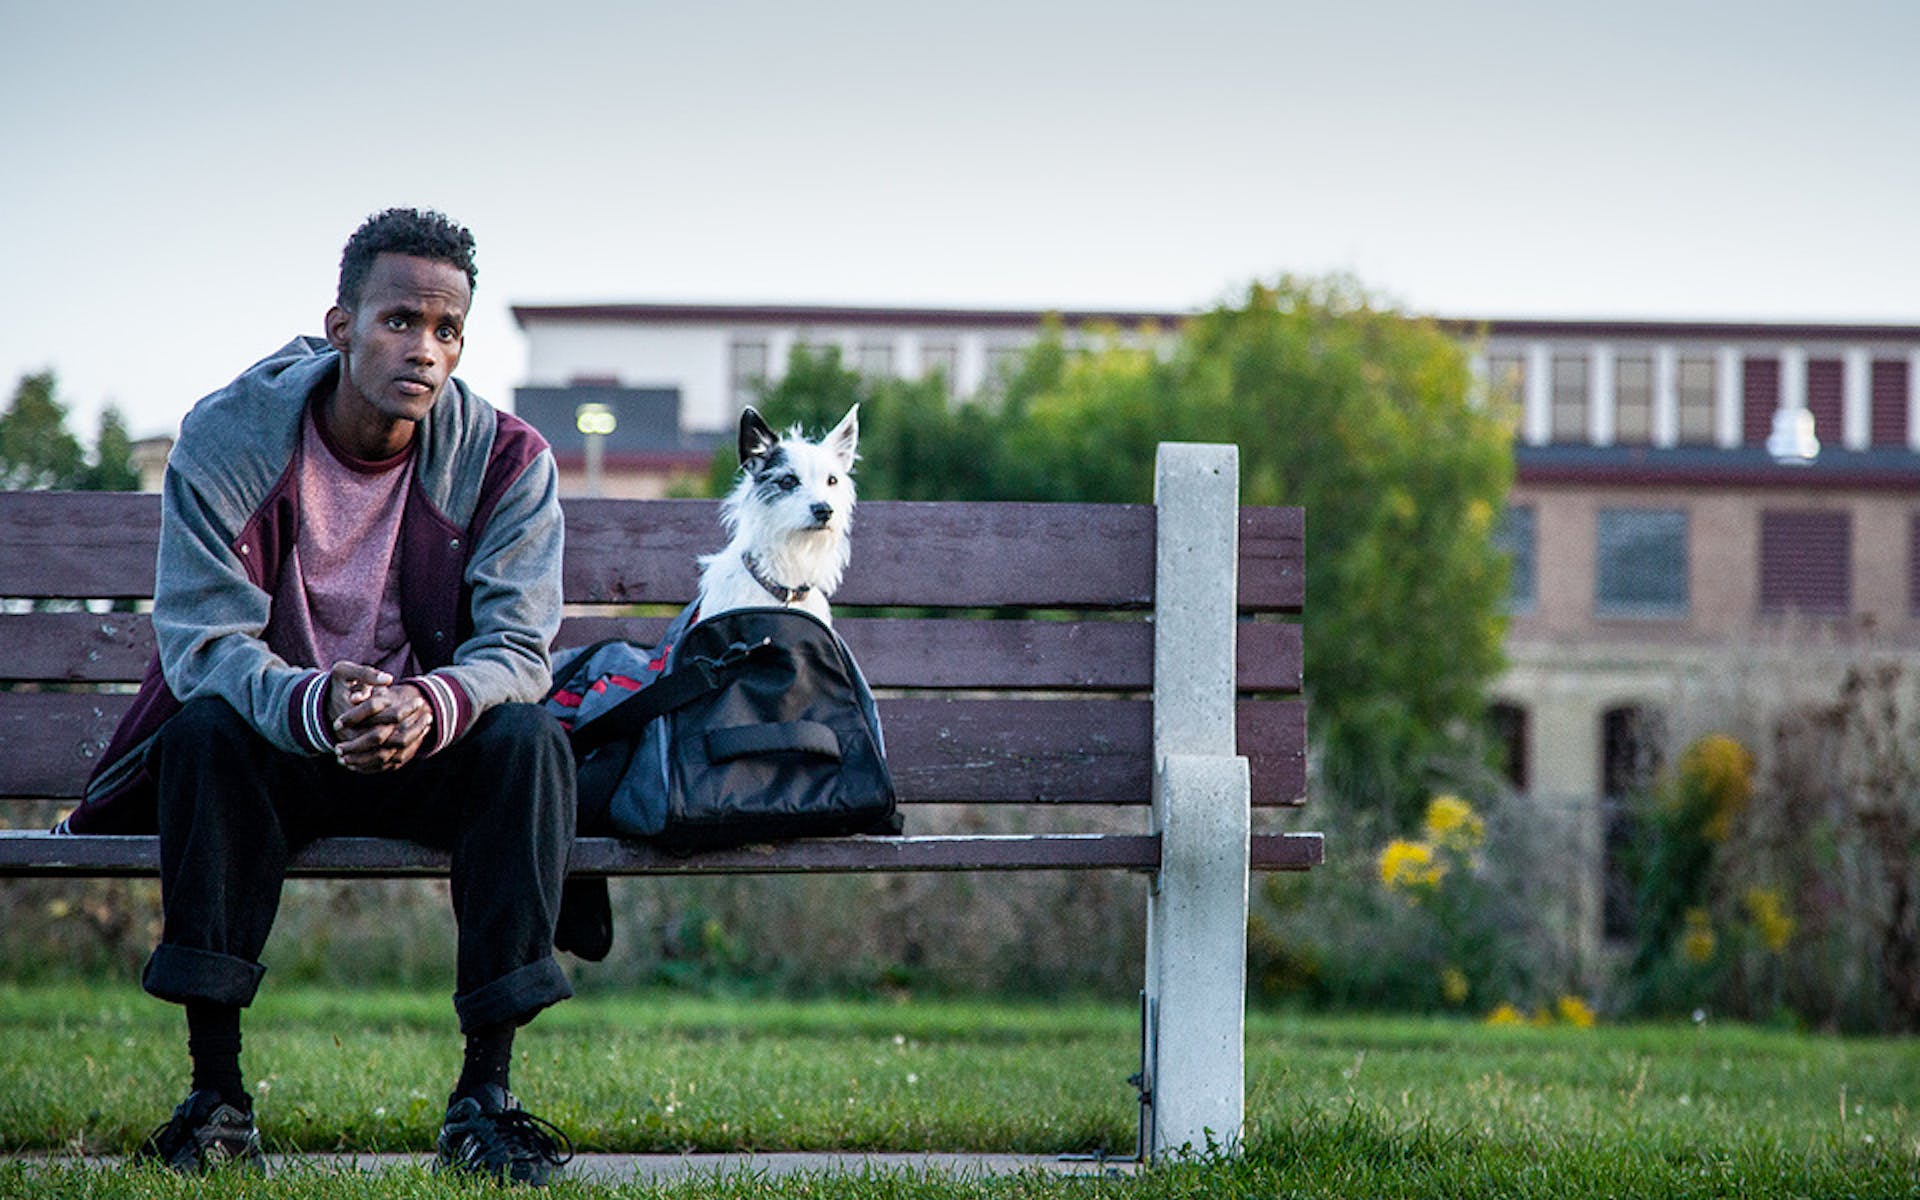 Man sitting on bench with dog and gym bag.